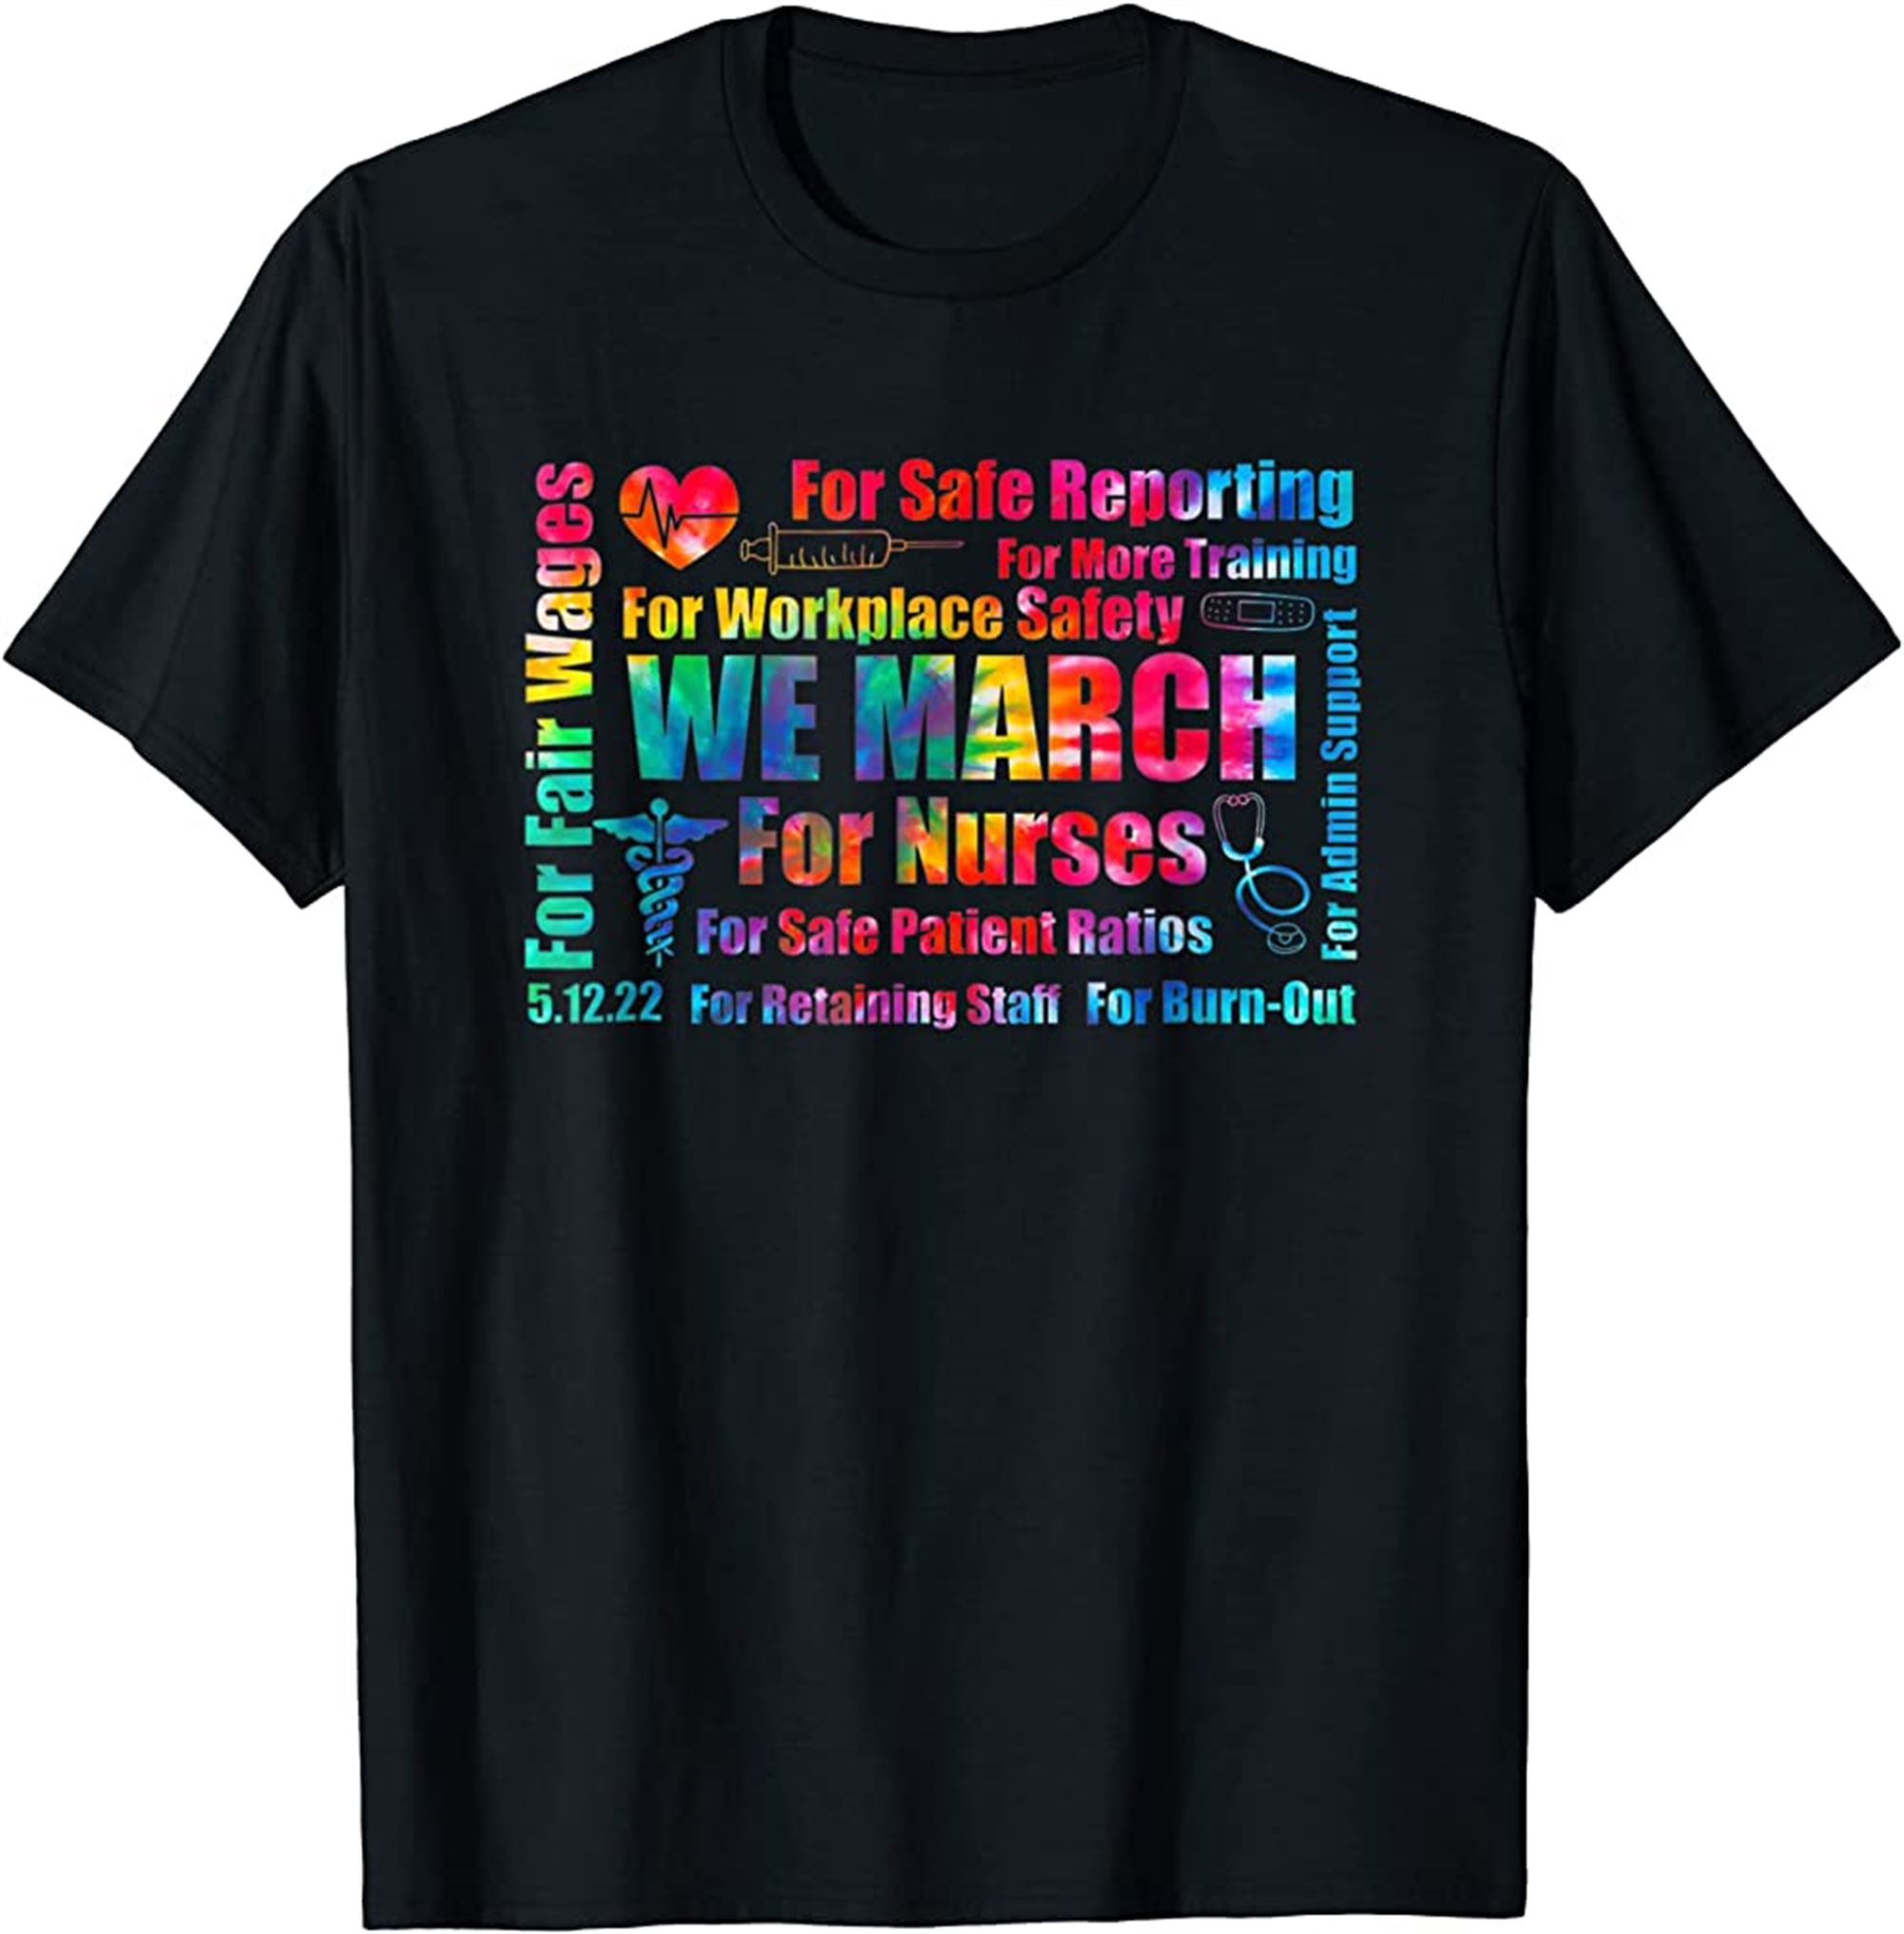 We March For Nurses 2022 Nurse Rn Million Nurse March T-shirt Full Size Up To 5xl